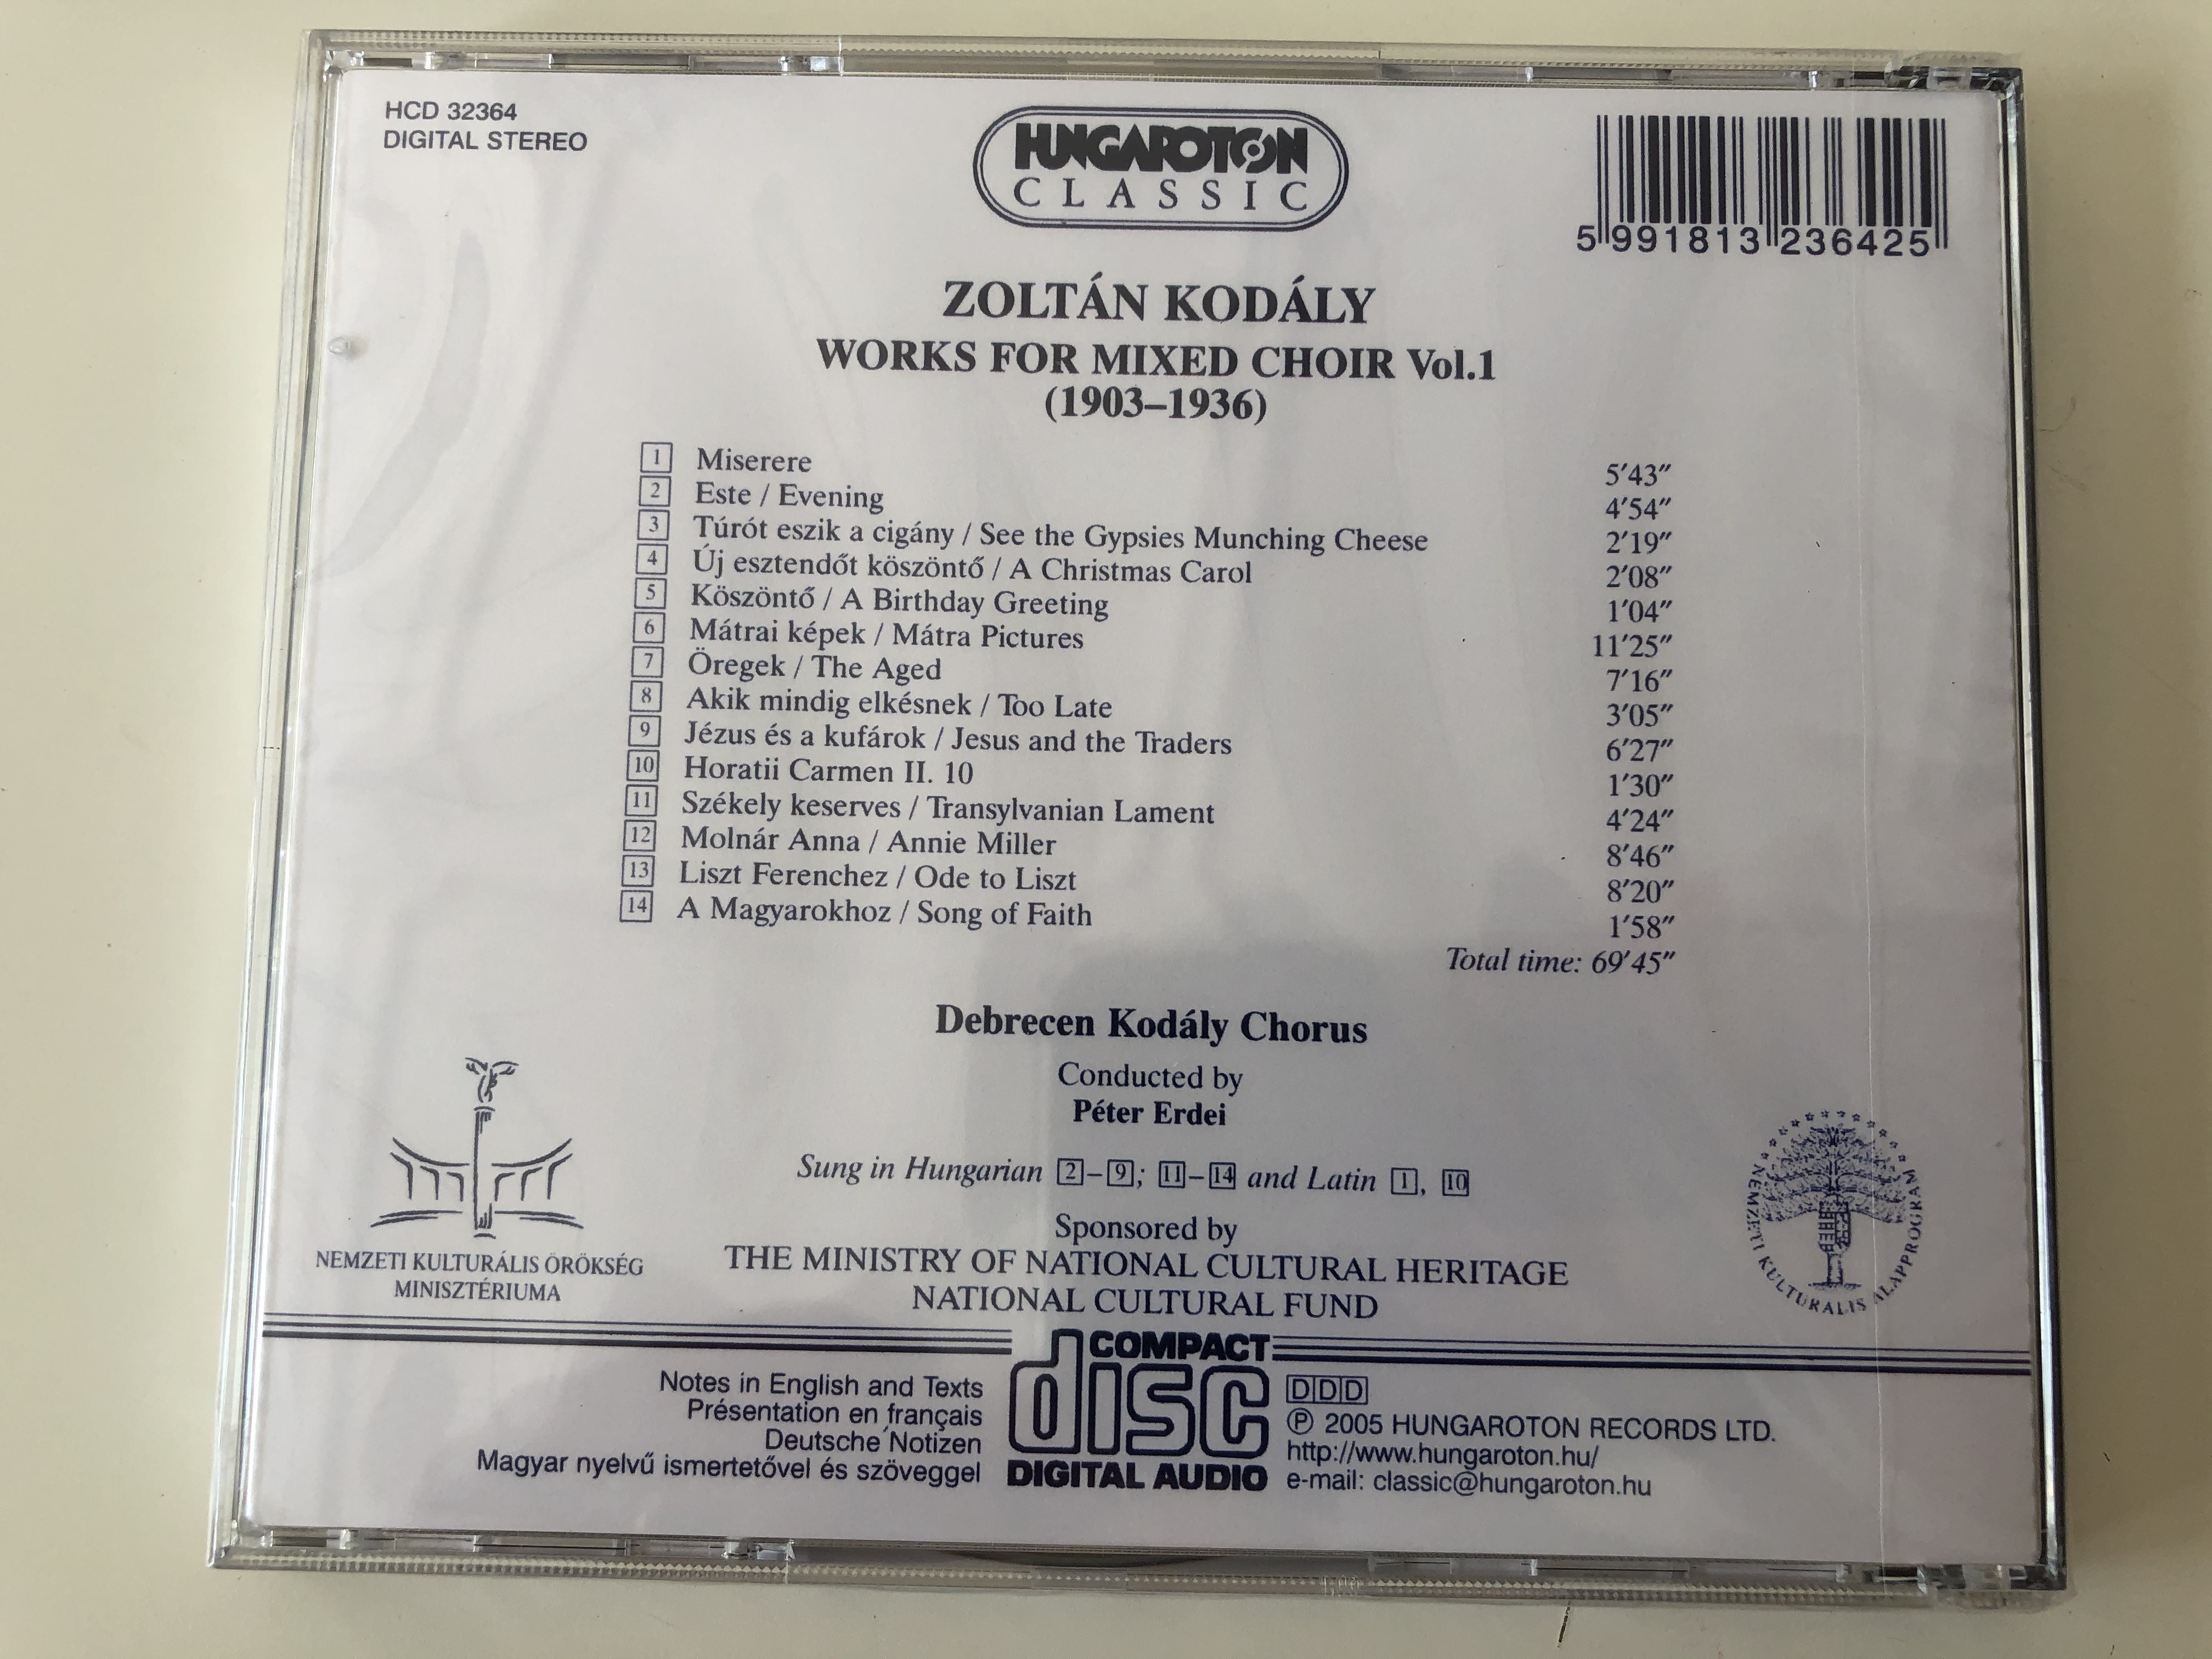 kodaly-works-for-mixed-choir-vol.-1-1903-1936-kodaly-choral-works-debecen-kodaly-chorus-peter-erdei-hungaroton-classic-audio-cd-2005-stereo-hcd-32364-2-.jpg